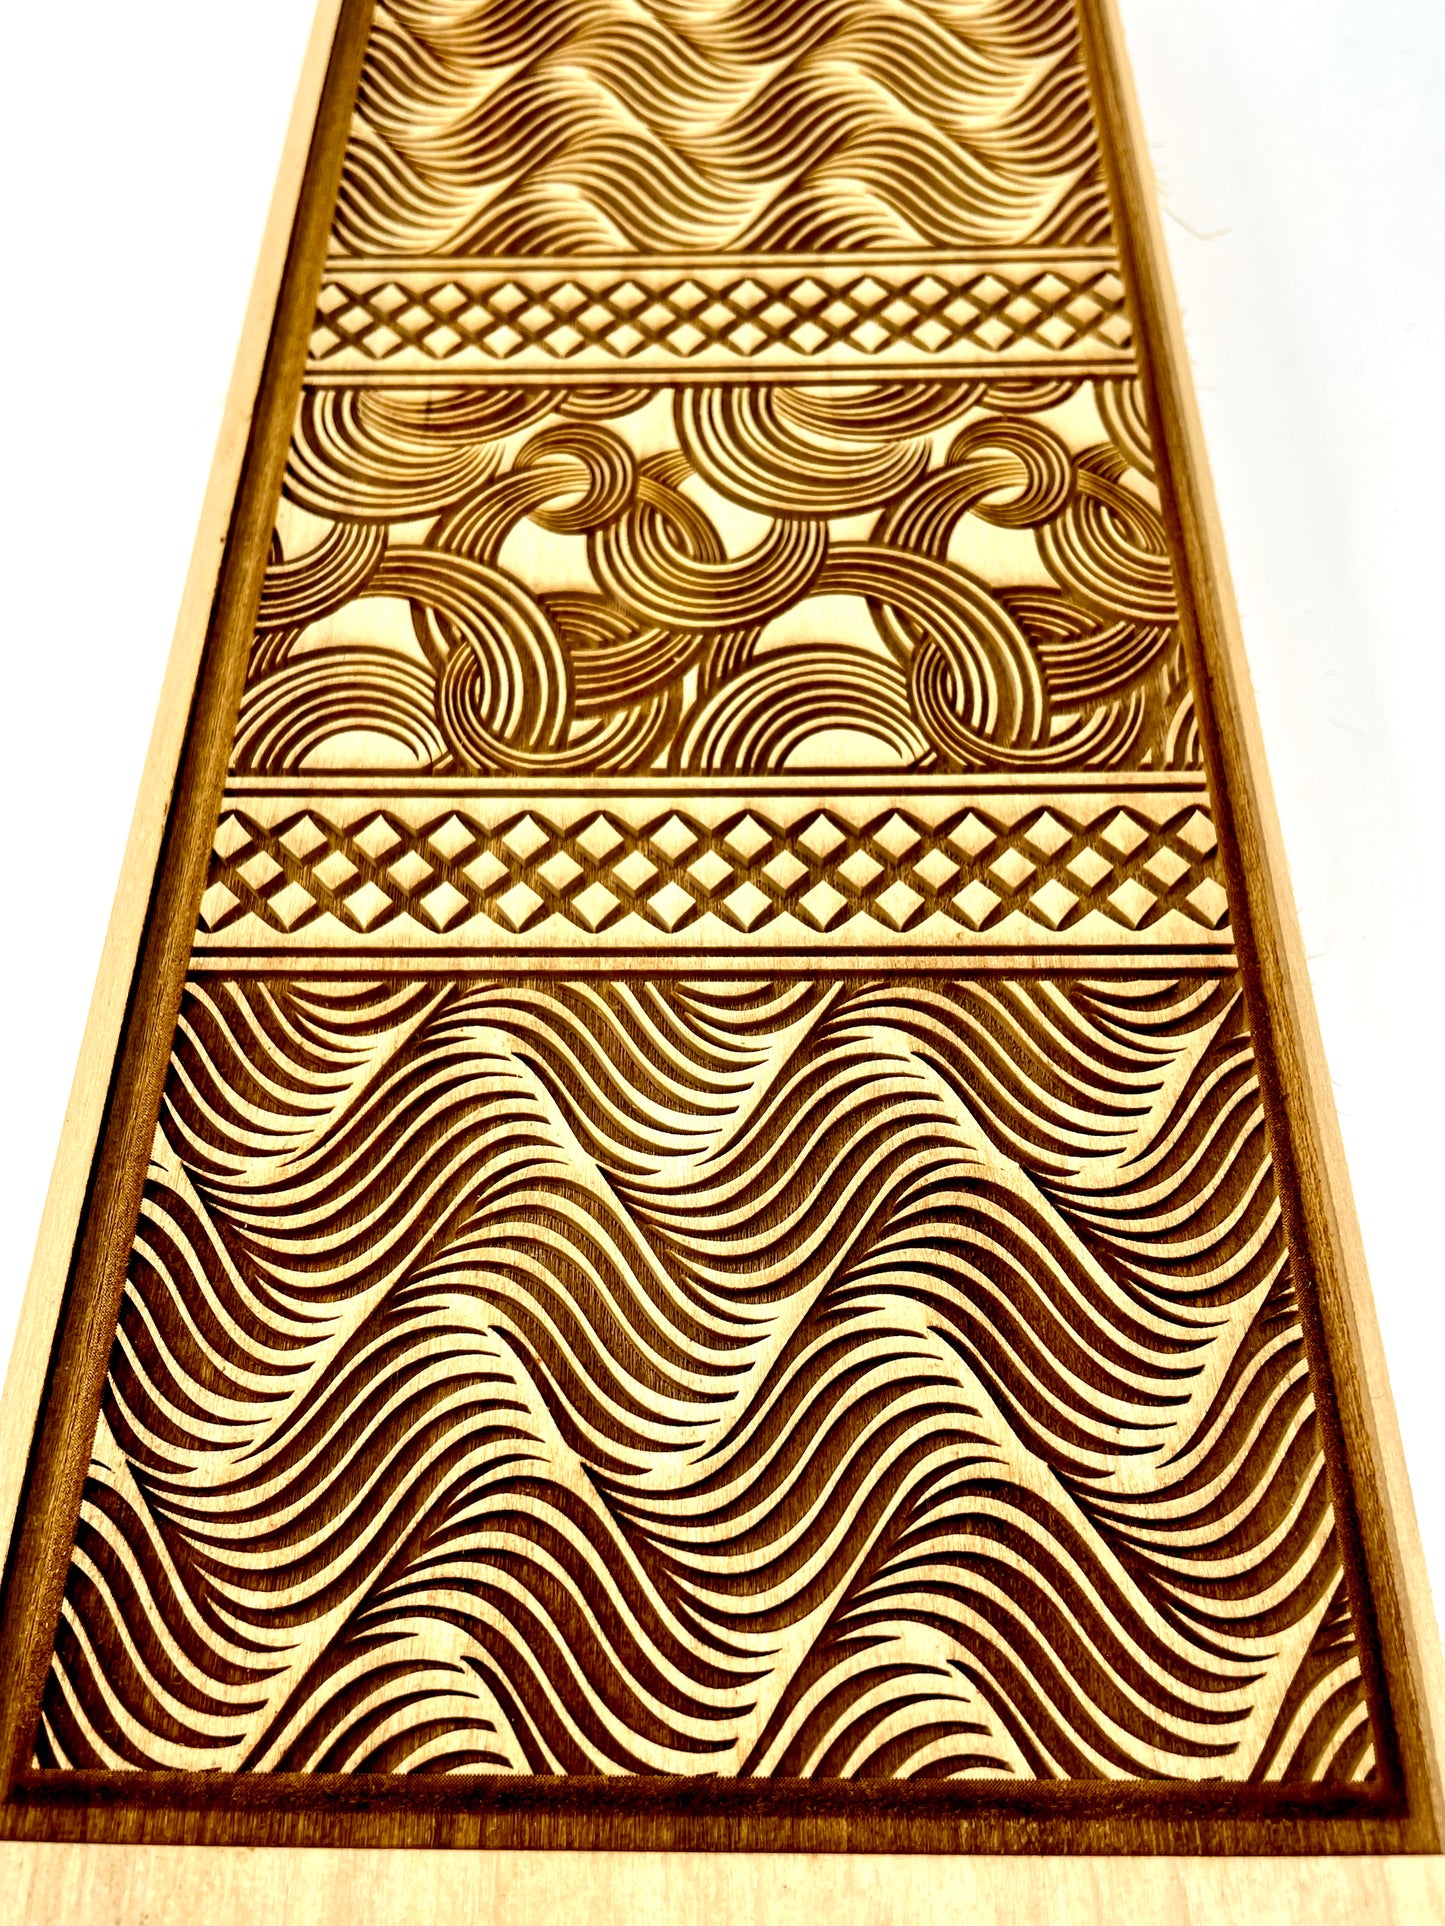 Combo Platter Textured Plank